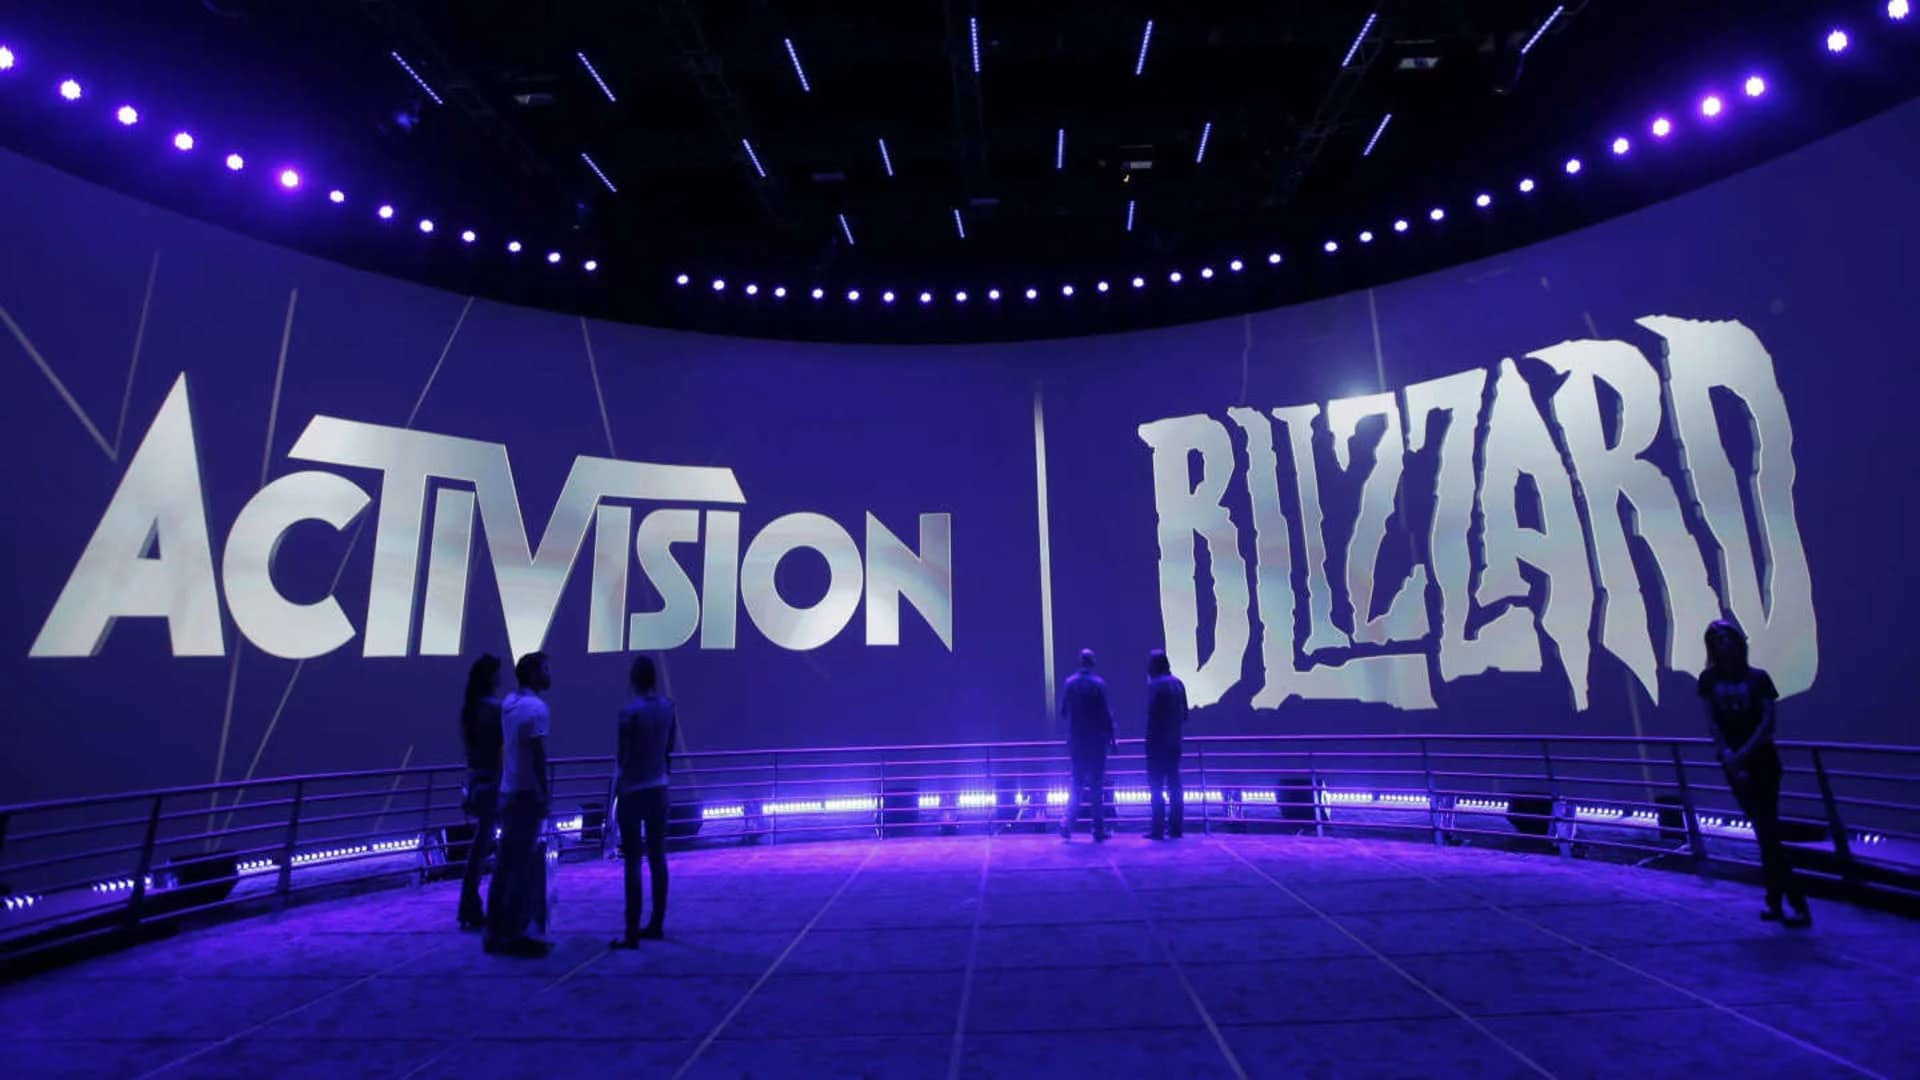 لوگوی Activision Blizzard روی نمایشگر بزرگ